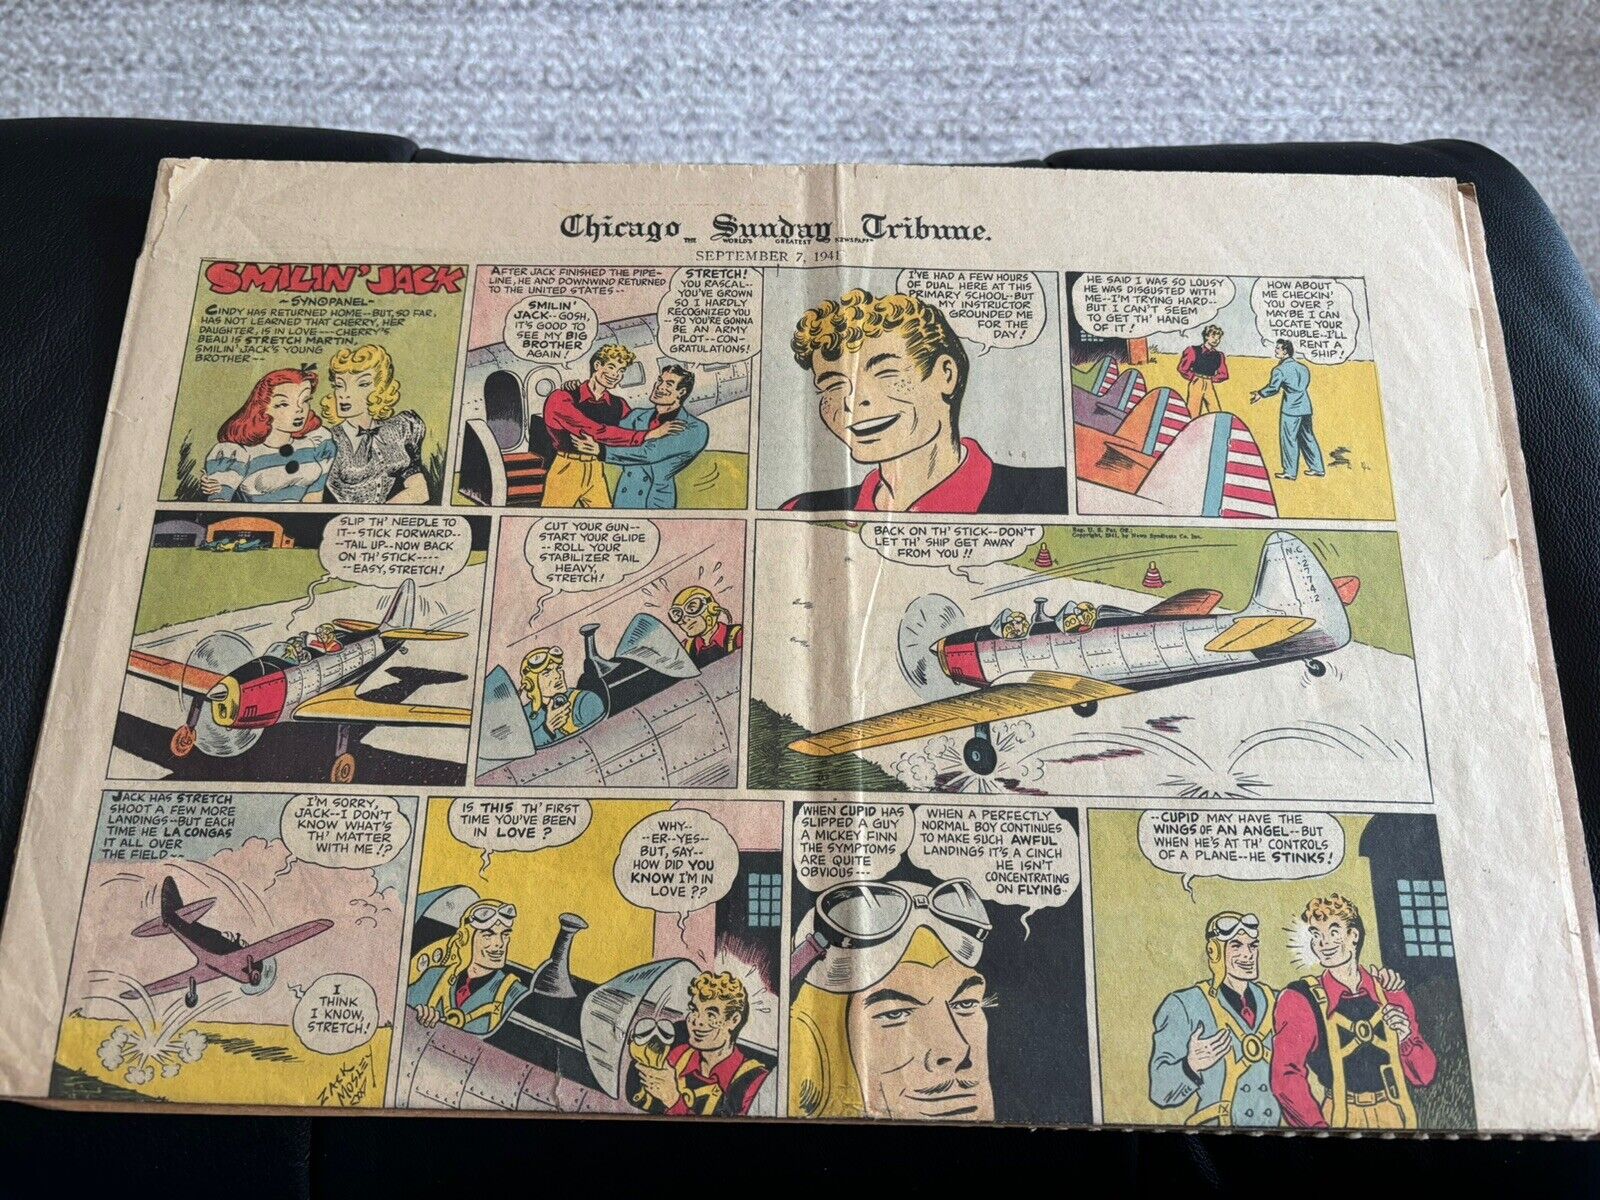 Vintage 1941 September 7th Newspaper Comic Strip Chicago Sunday Tribune